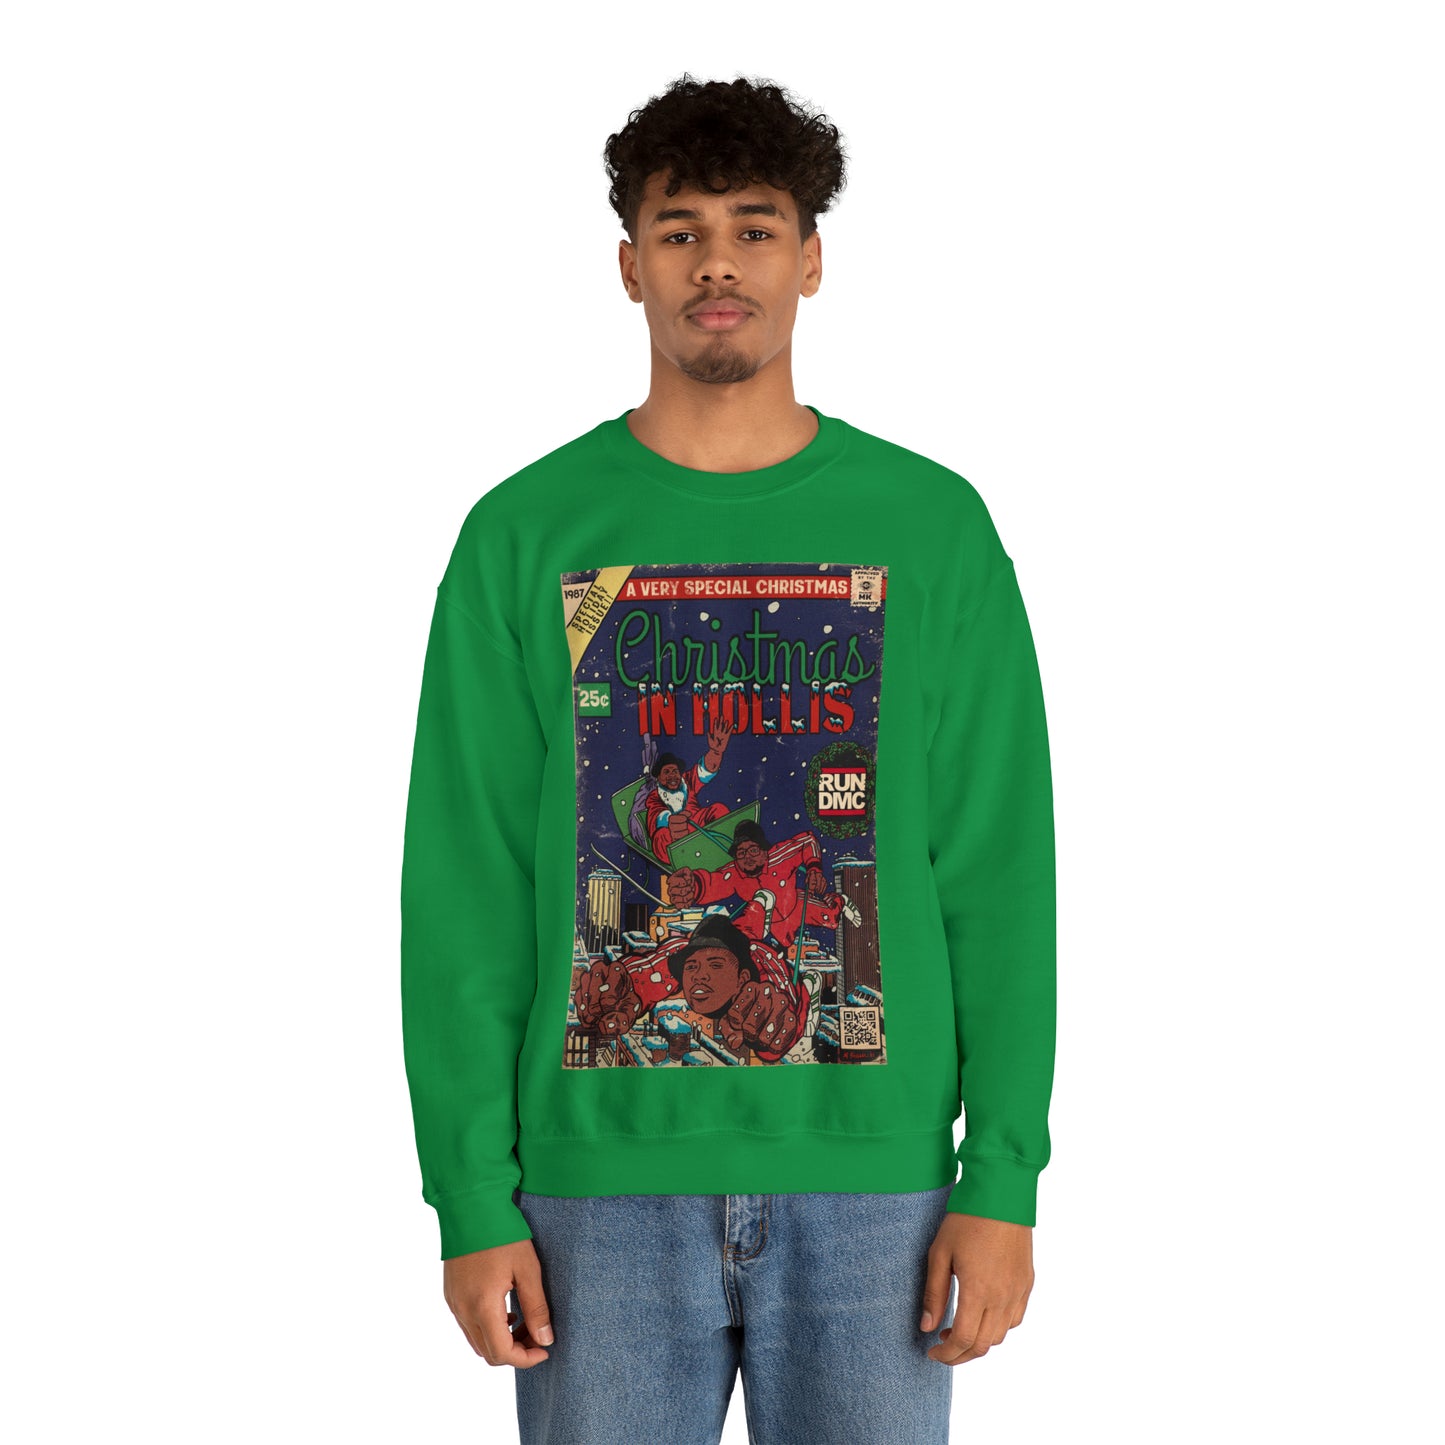 RUN DMC - Christmas in Hollis - Unisex Heavy Blend™ Crewneck Sweatshirt